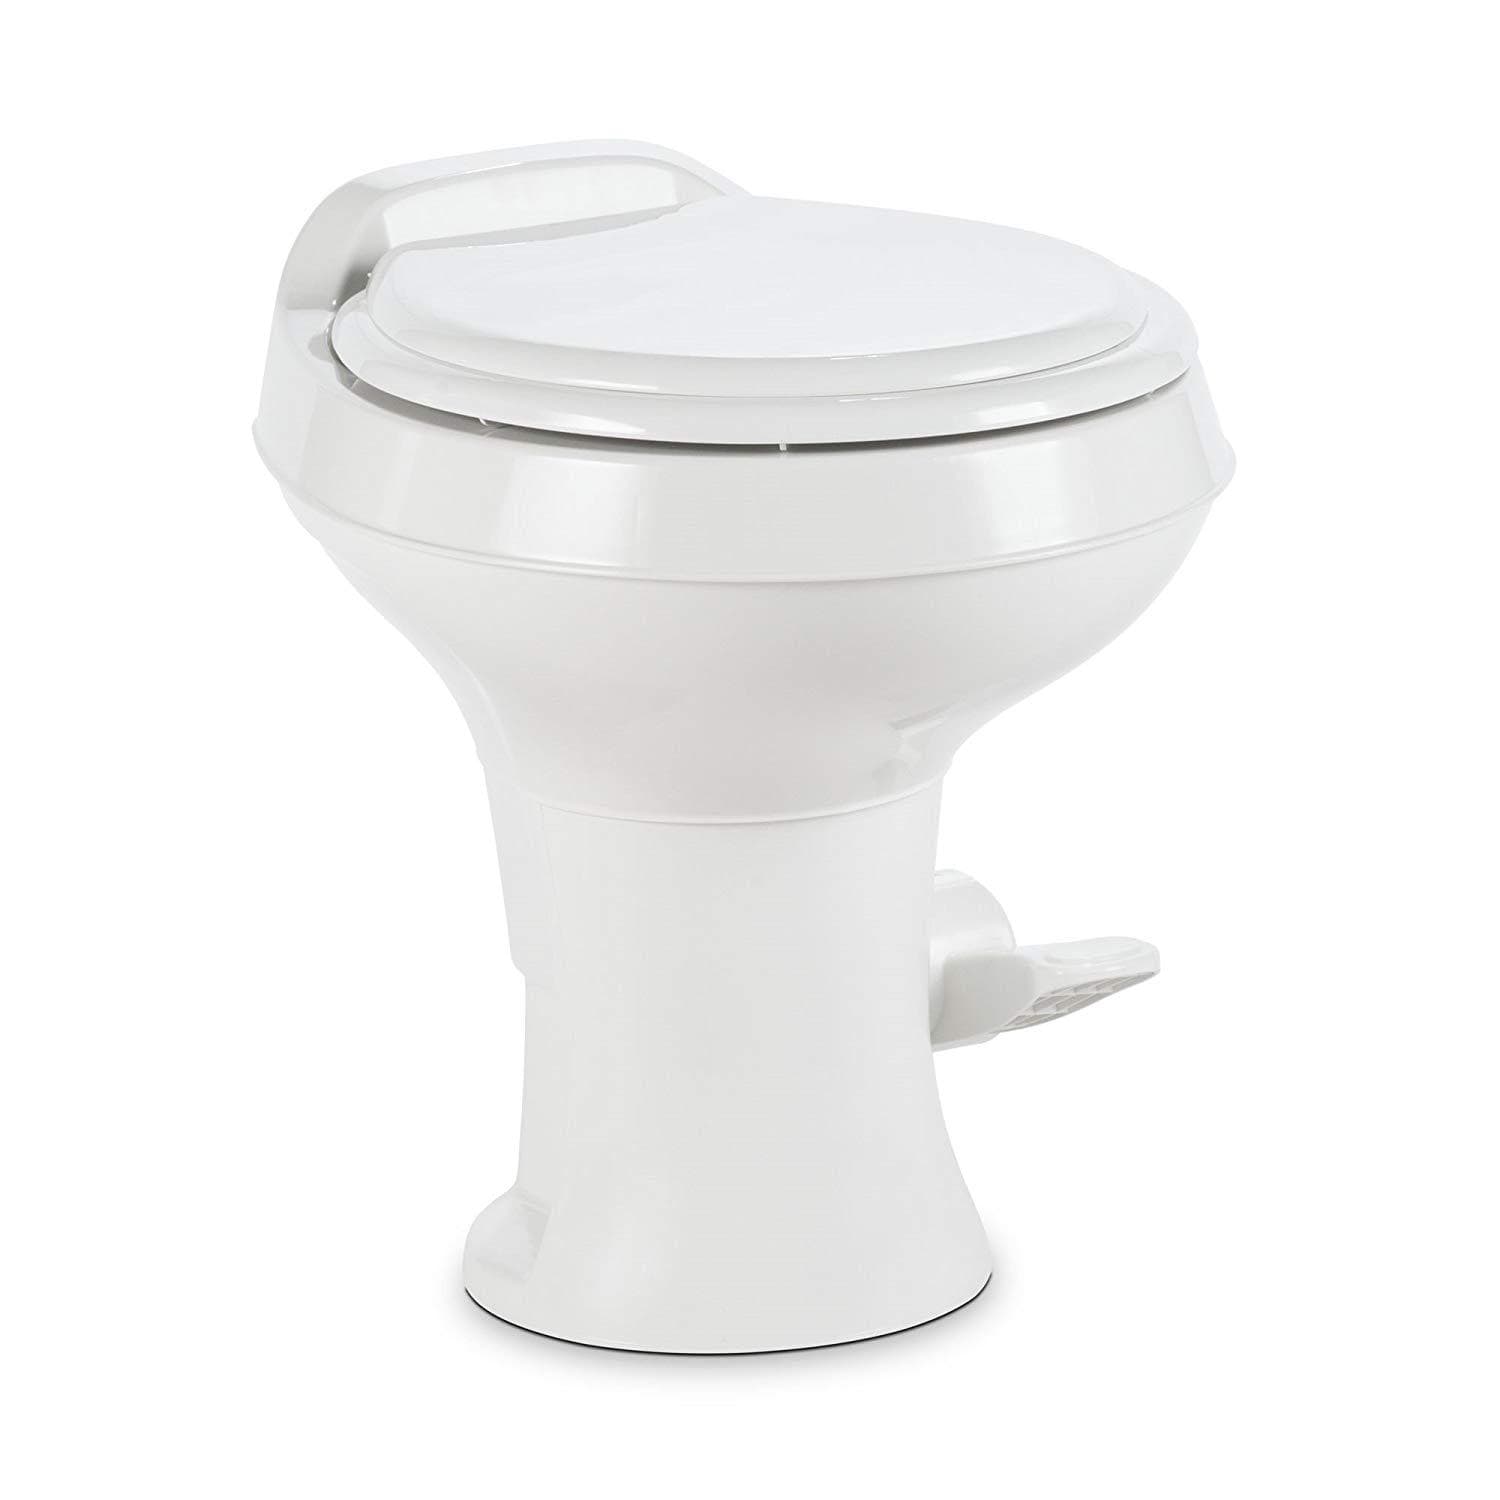 Dometic Sealand 302300171 300 Series RV Toilet w/Hand Spray White Camper Trailer RV